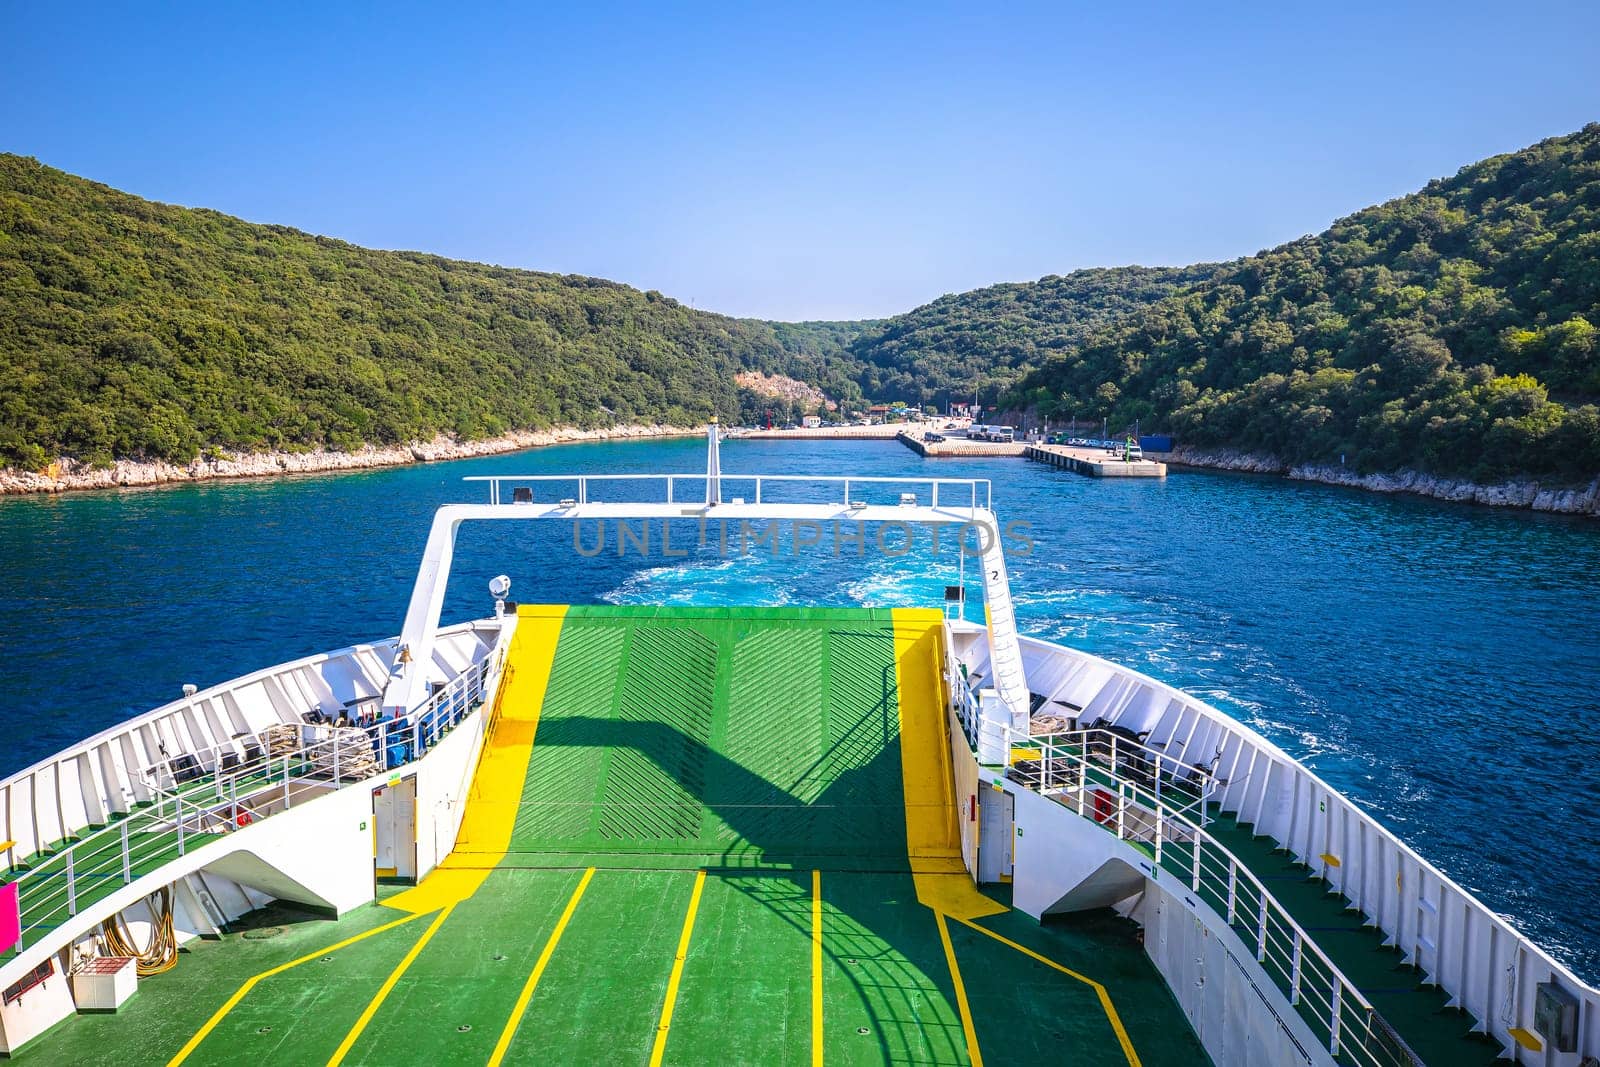 Adriatic ferry boat deck view, public sea transportation, Cres island Croatia